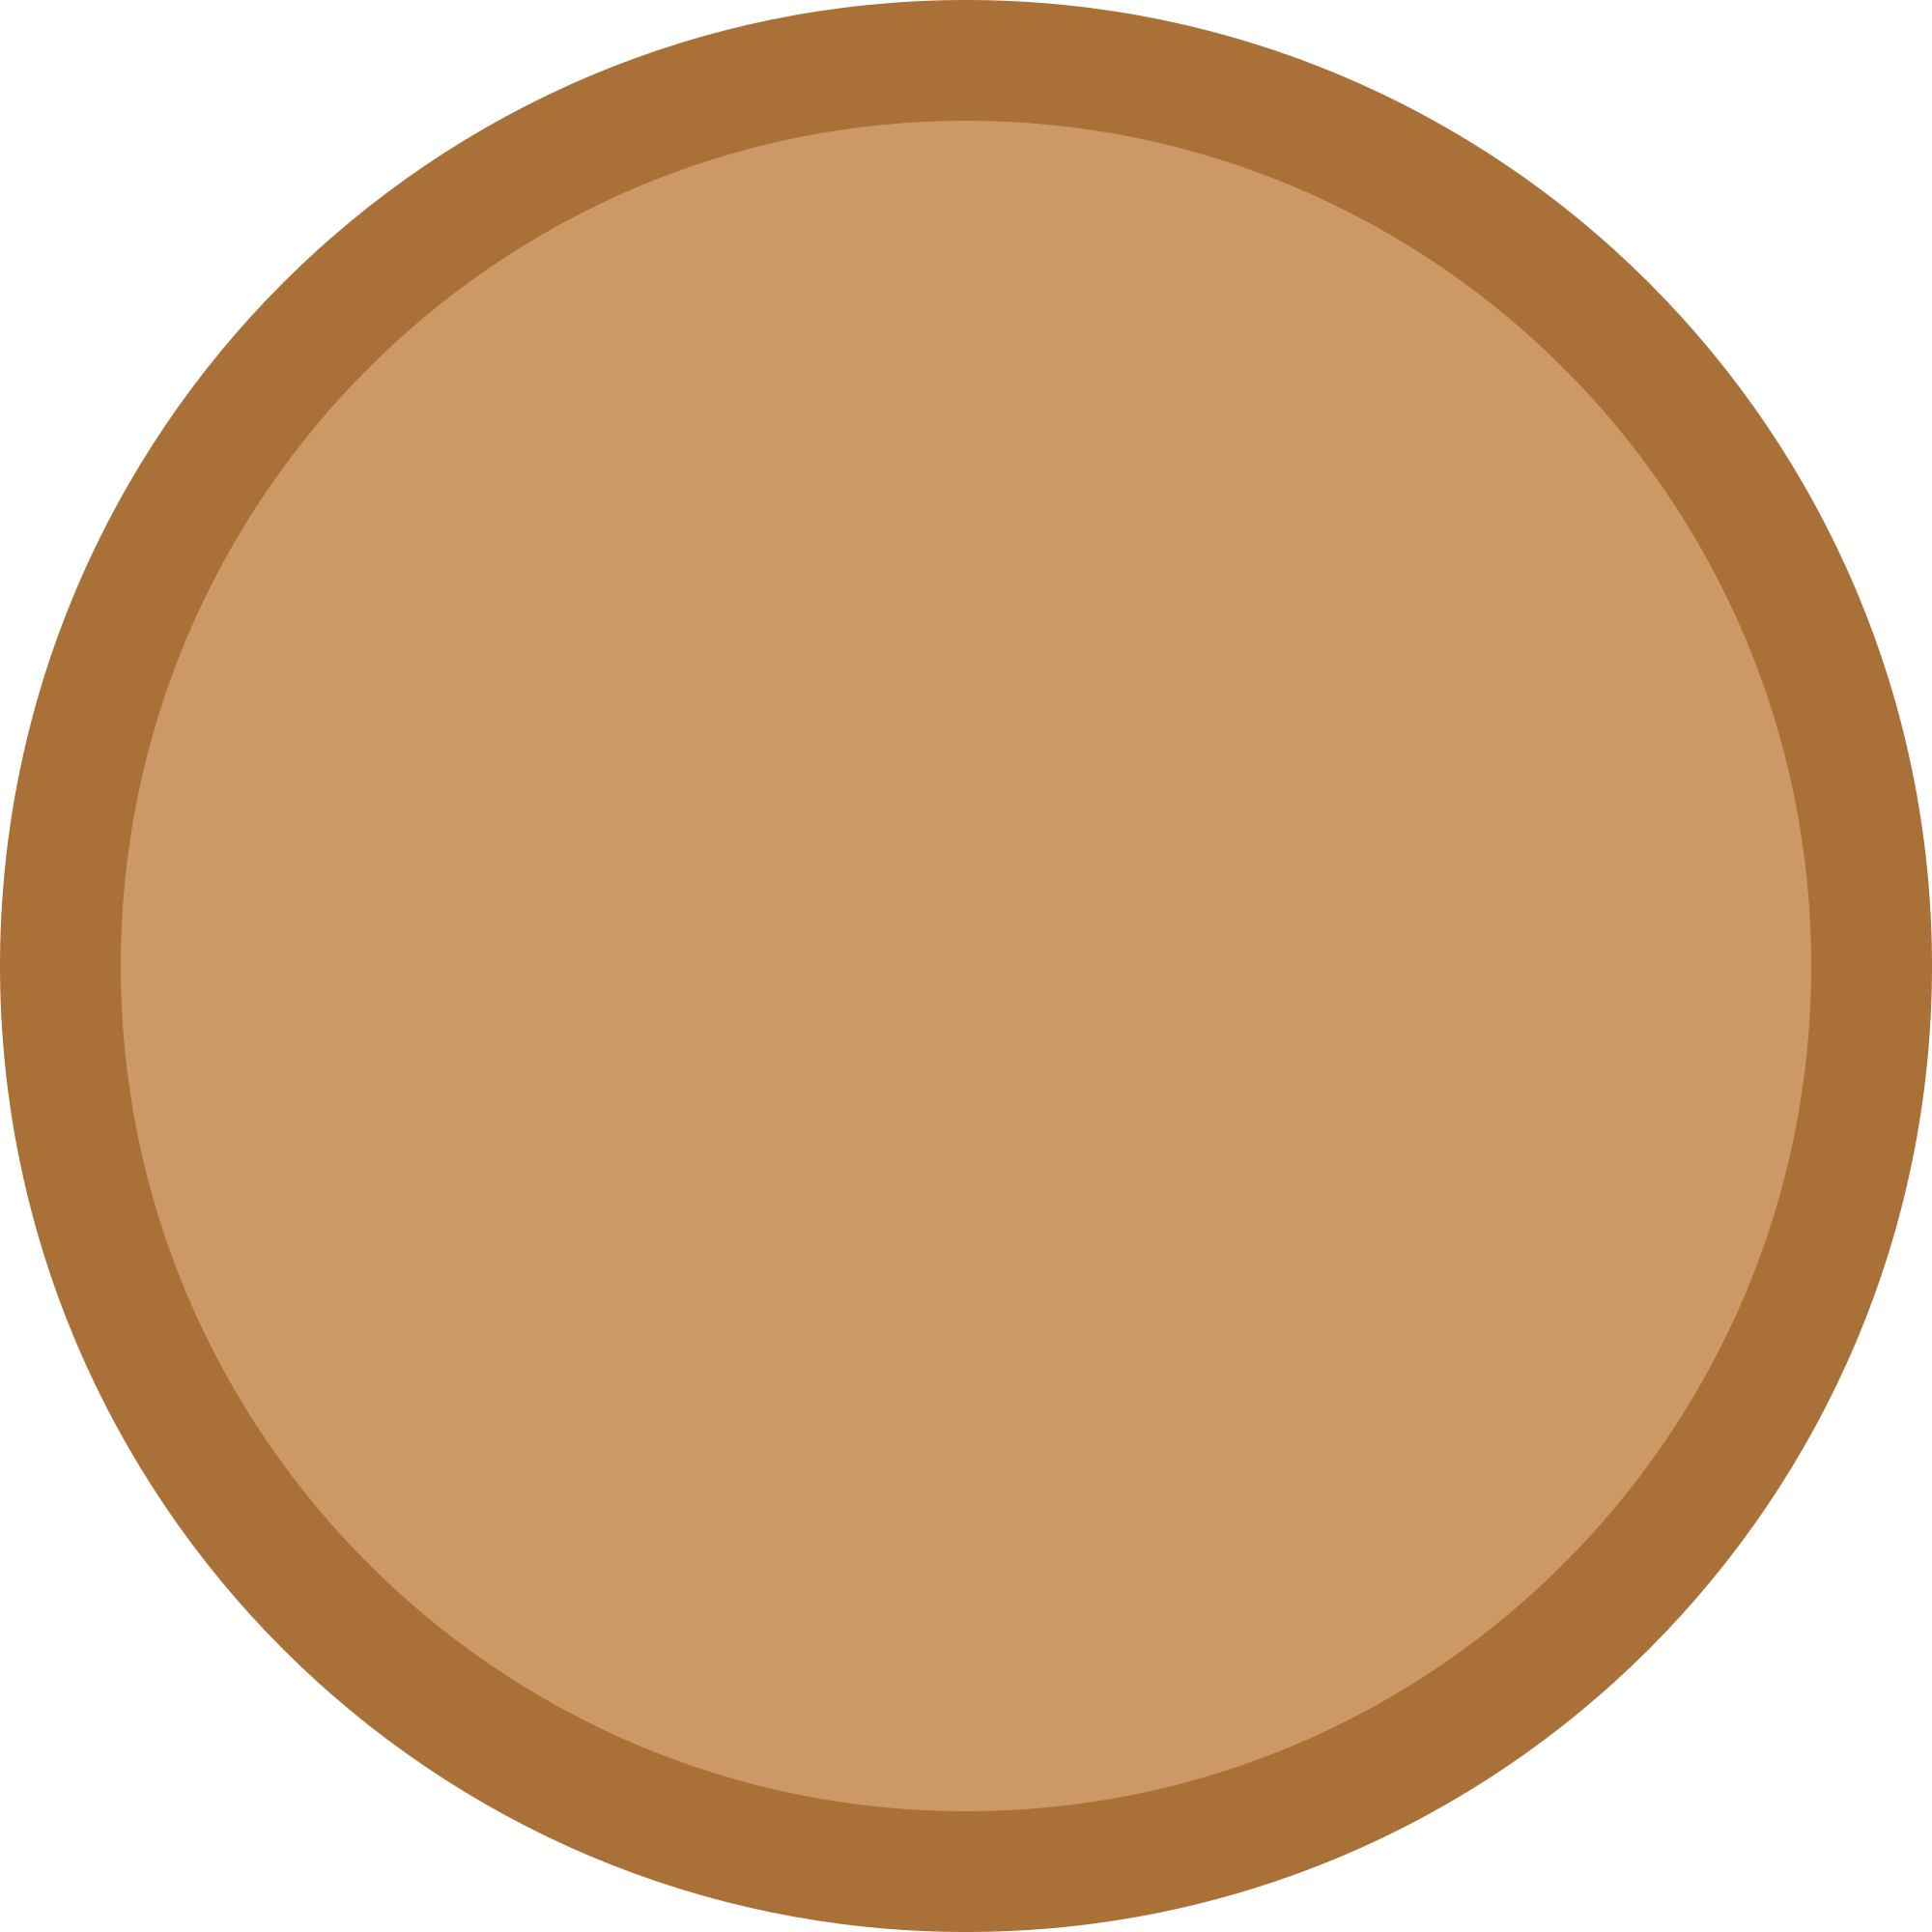 Blank Golden Seal Background PNG Image